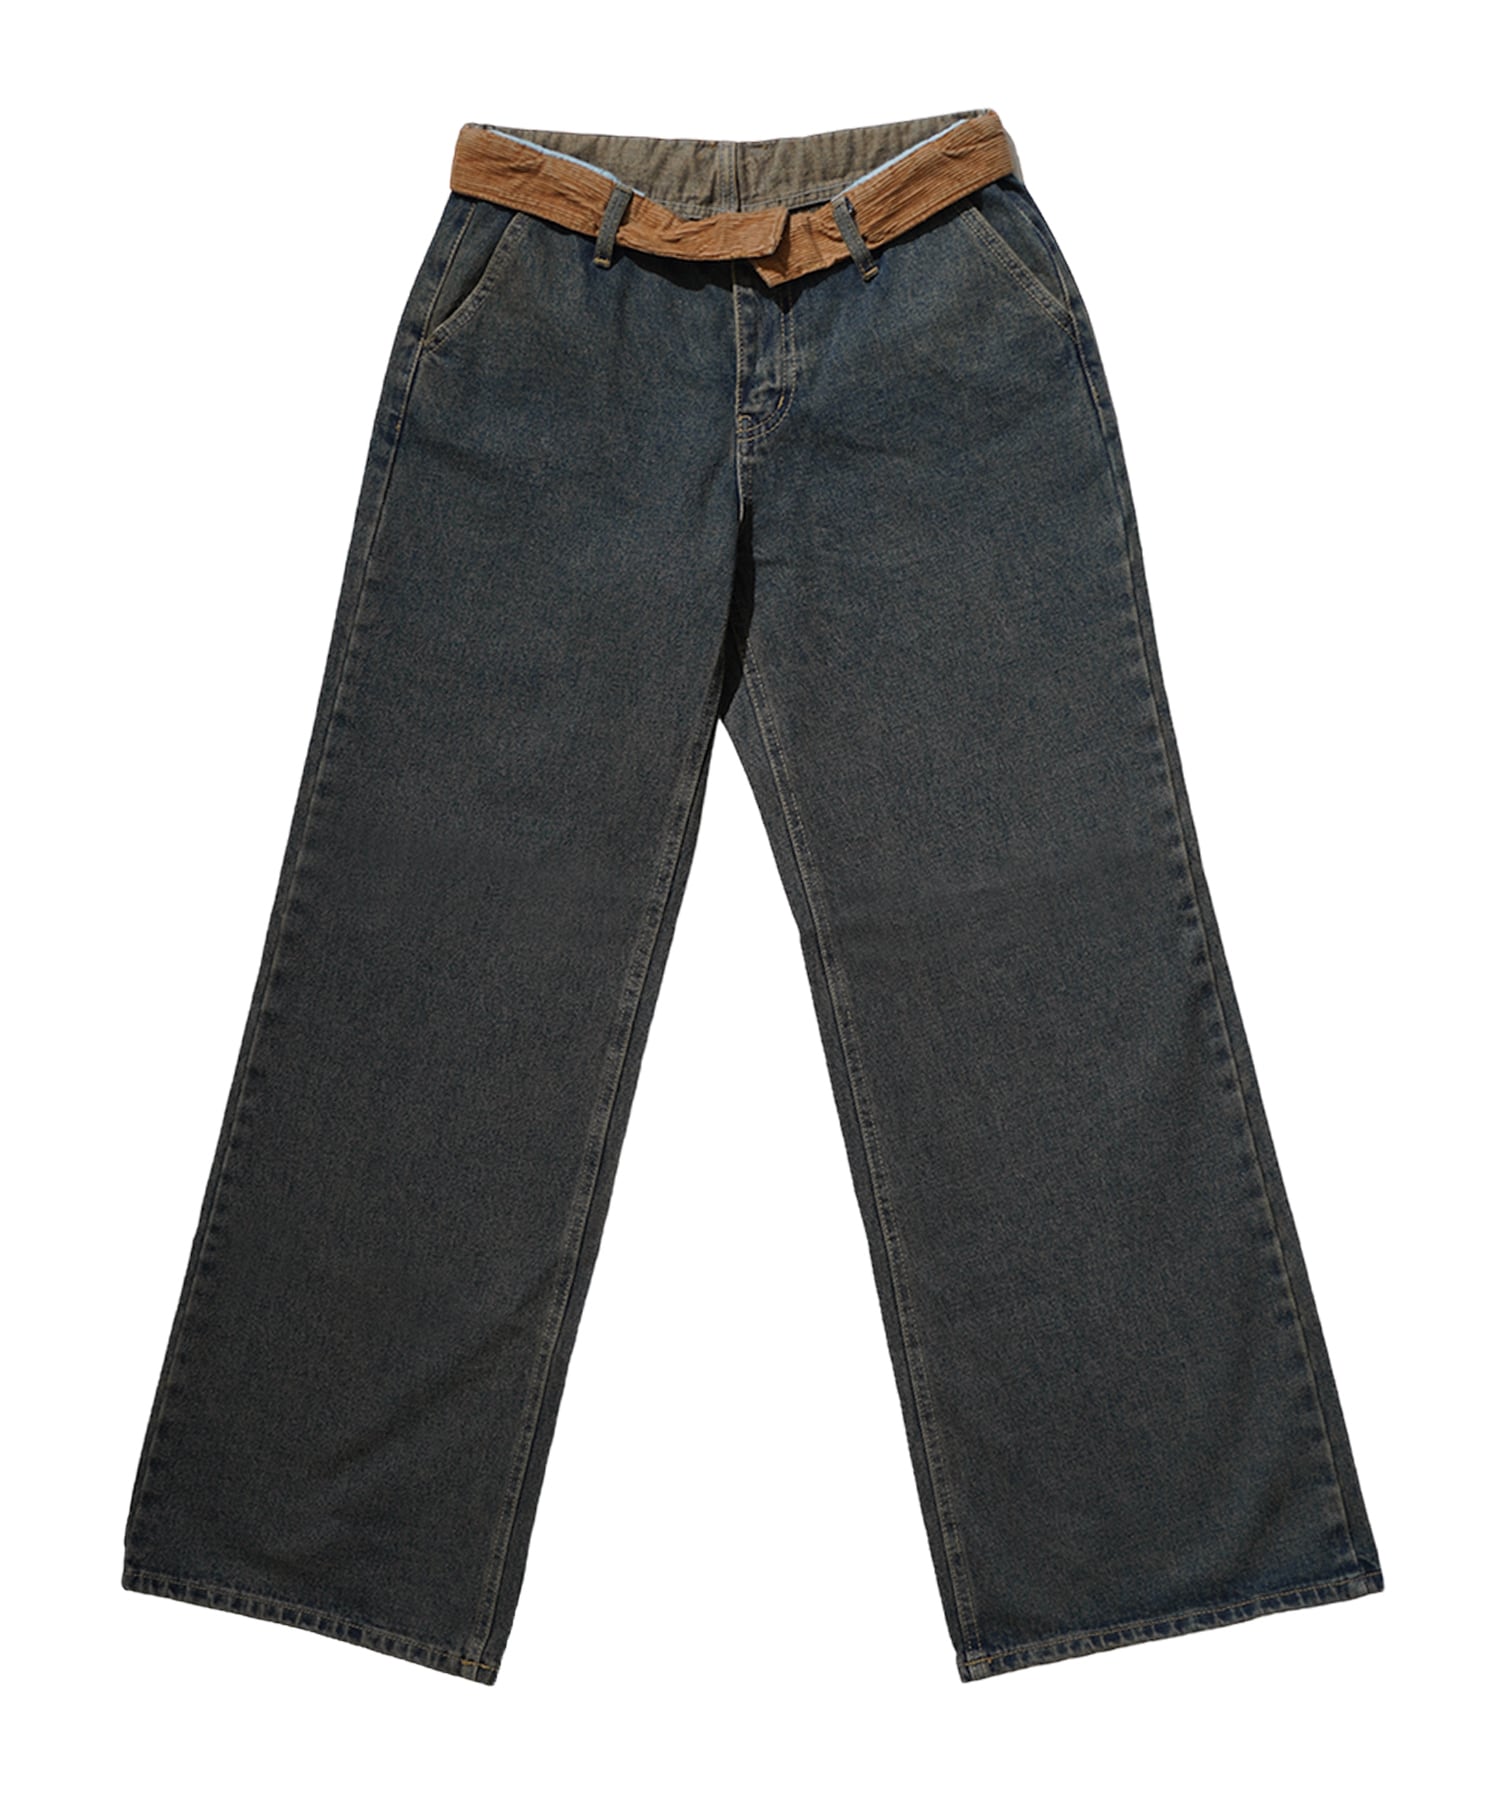 Waist corduroy jeans